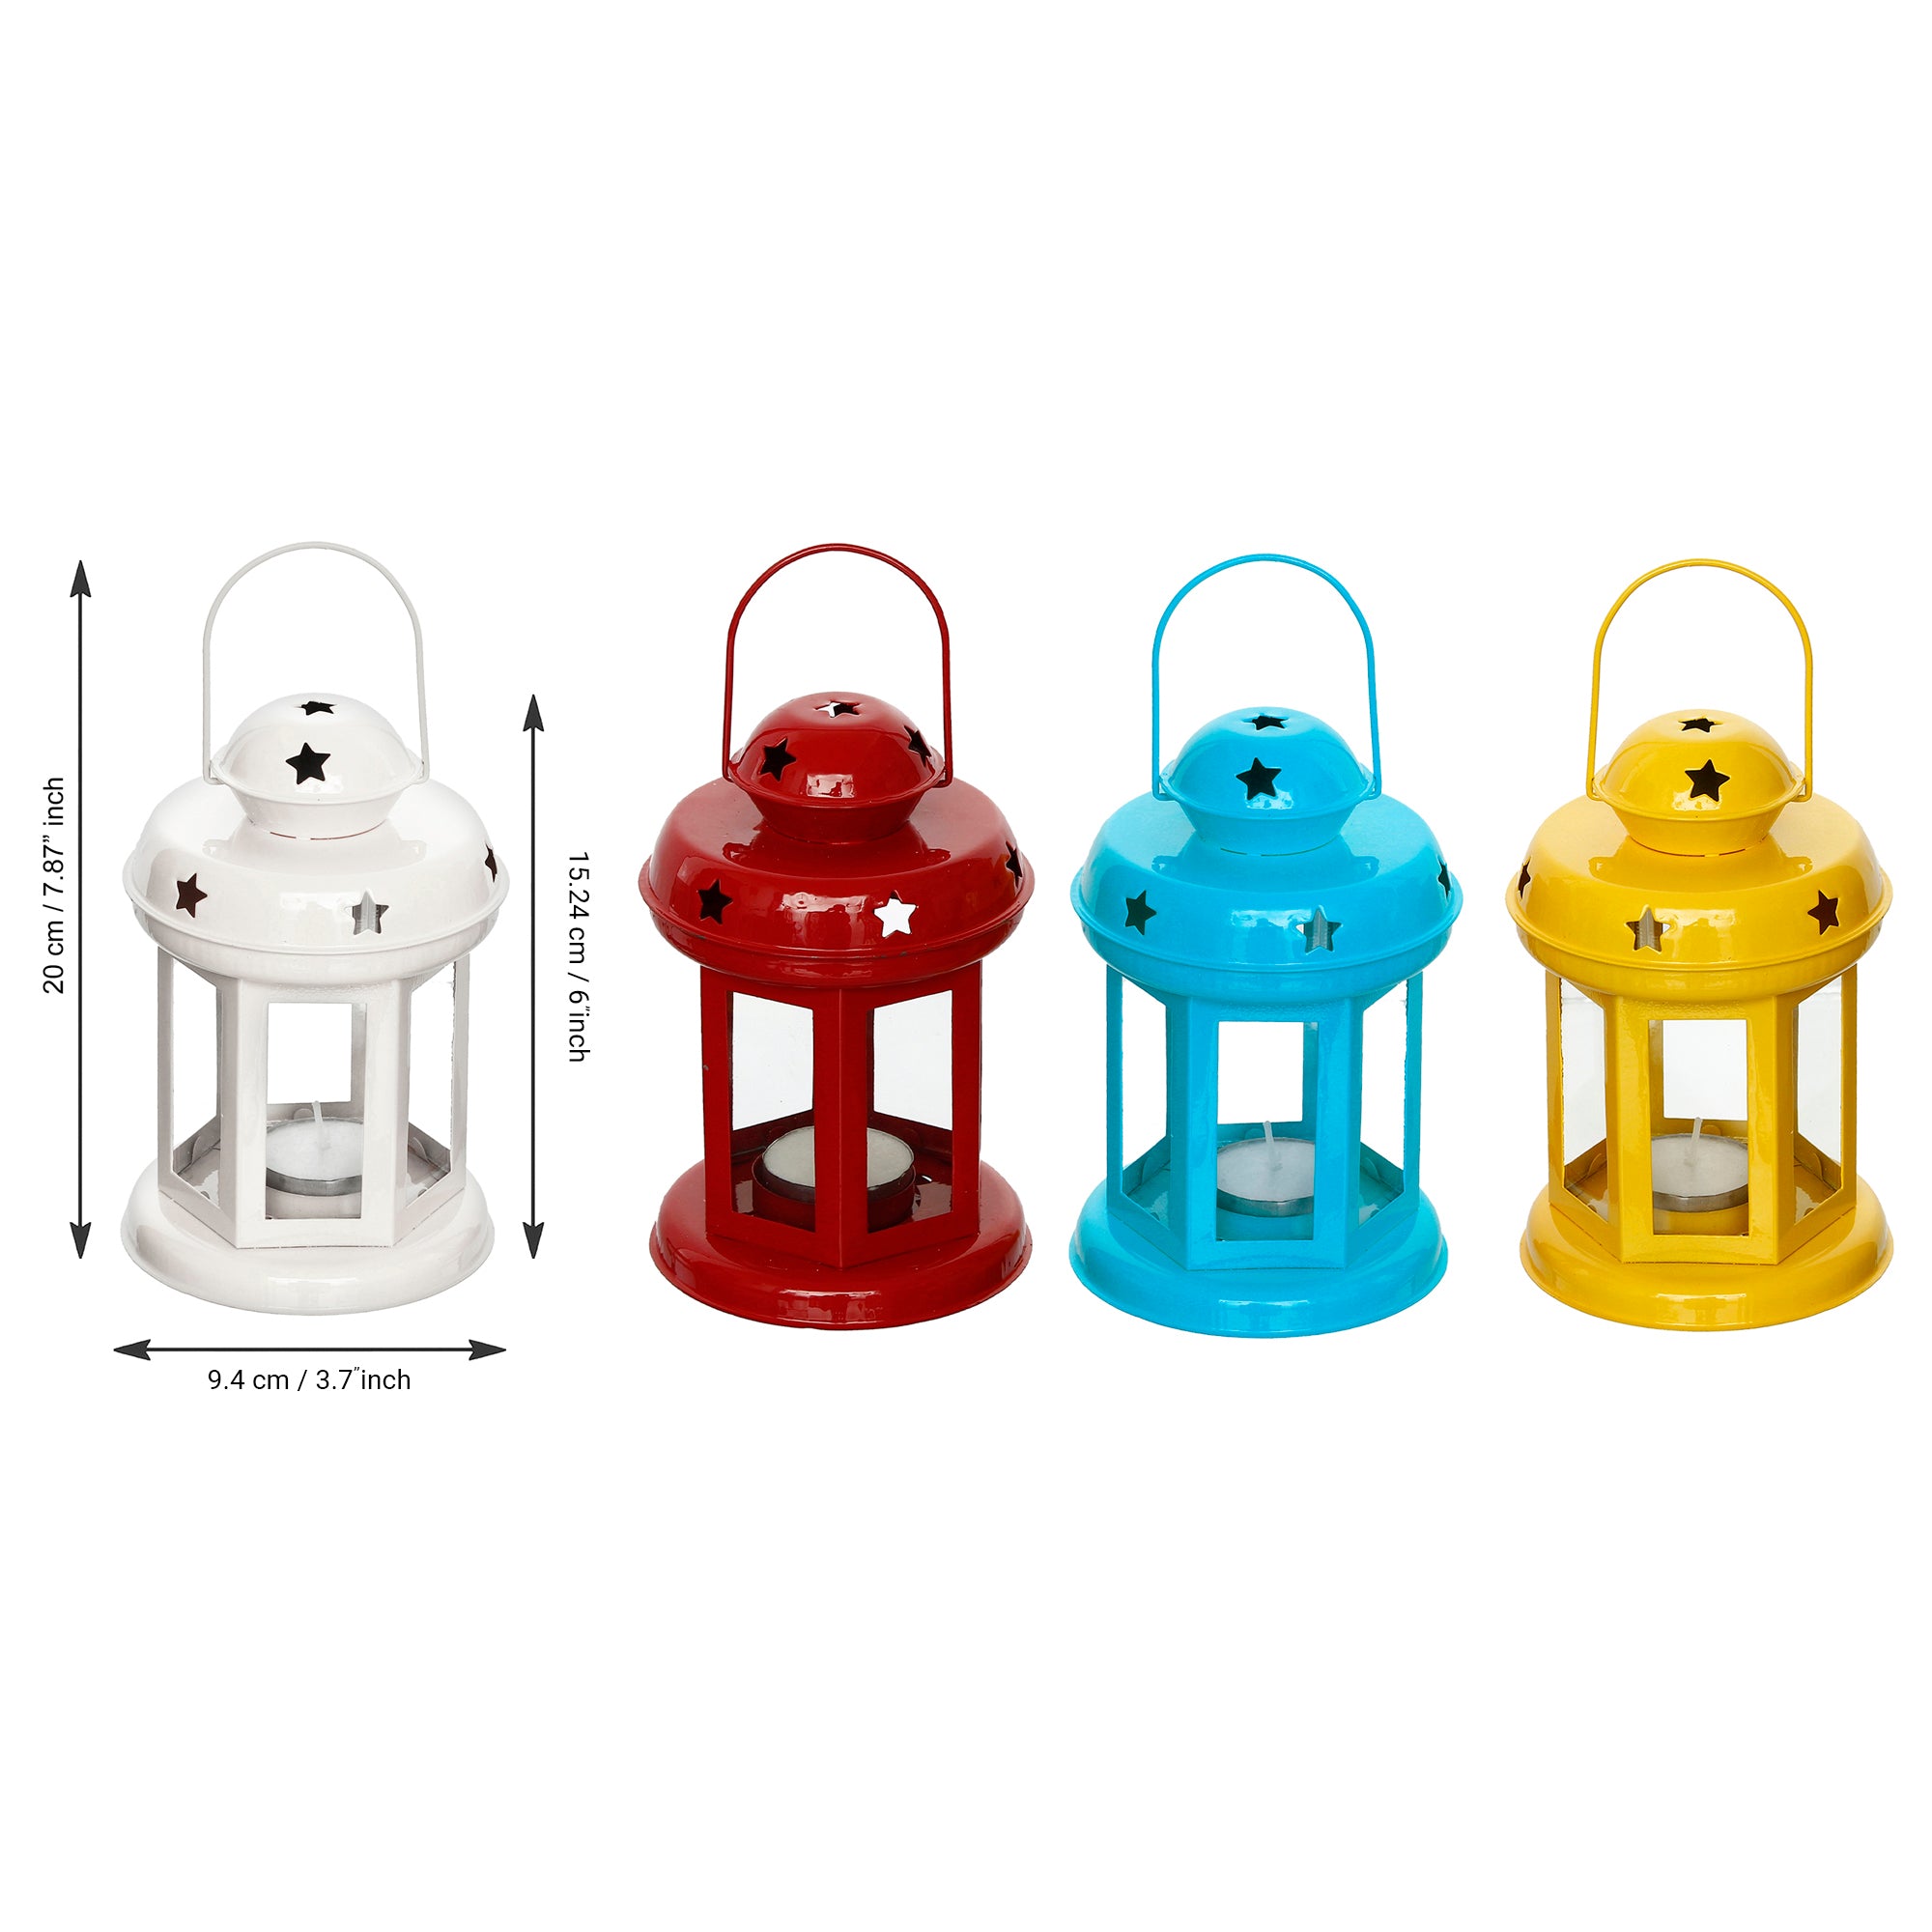 Iron Set of 4 tea light candle holder Lantern(Blue, Yellow, Red, White) 3